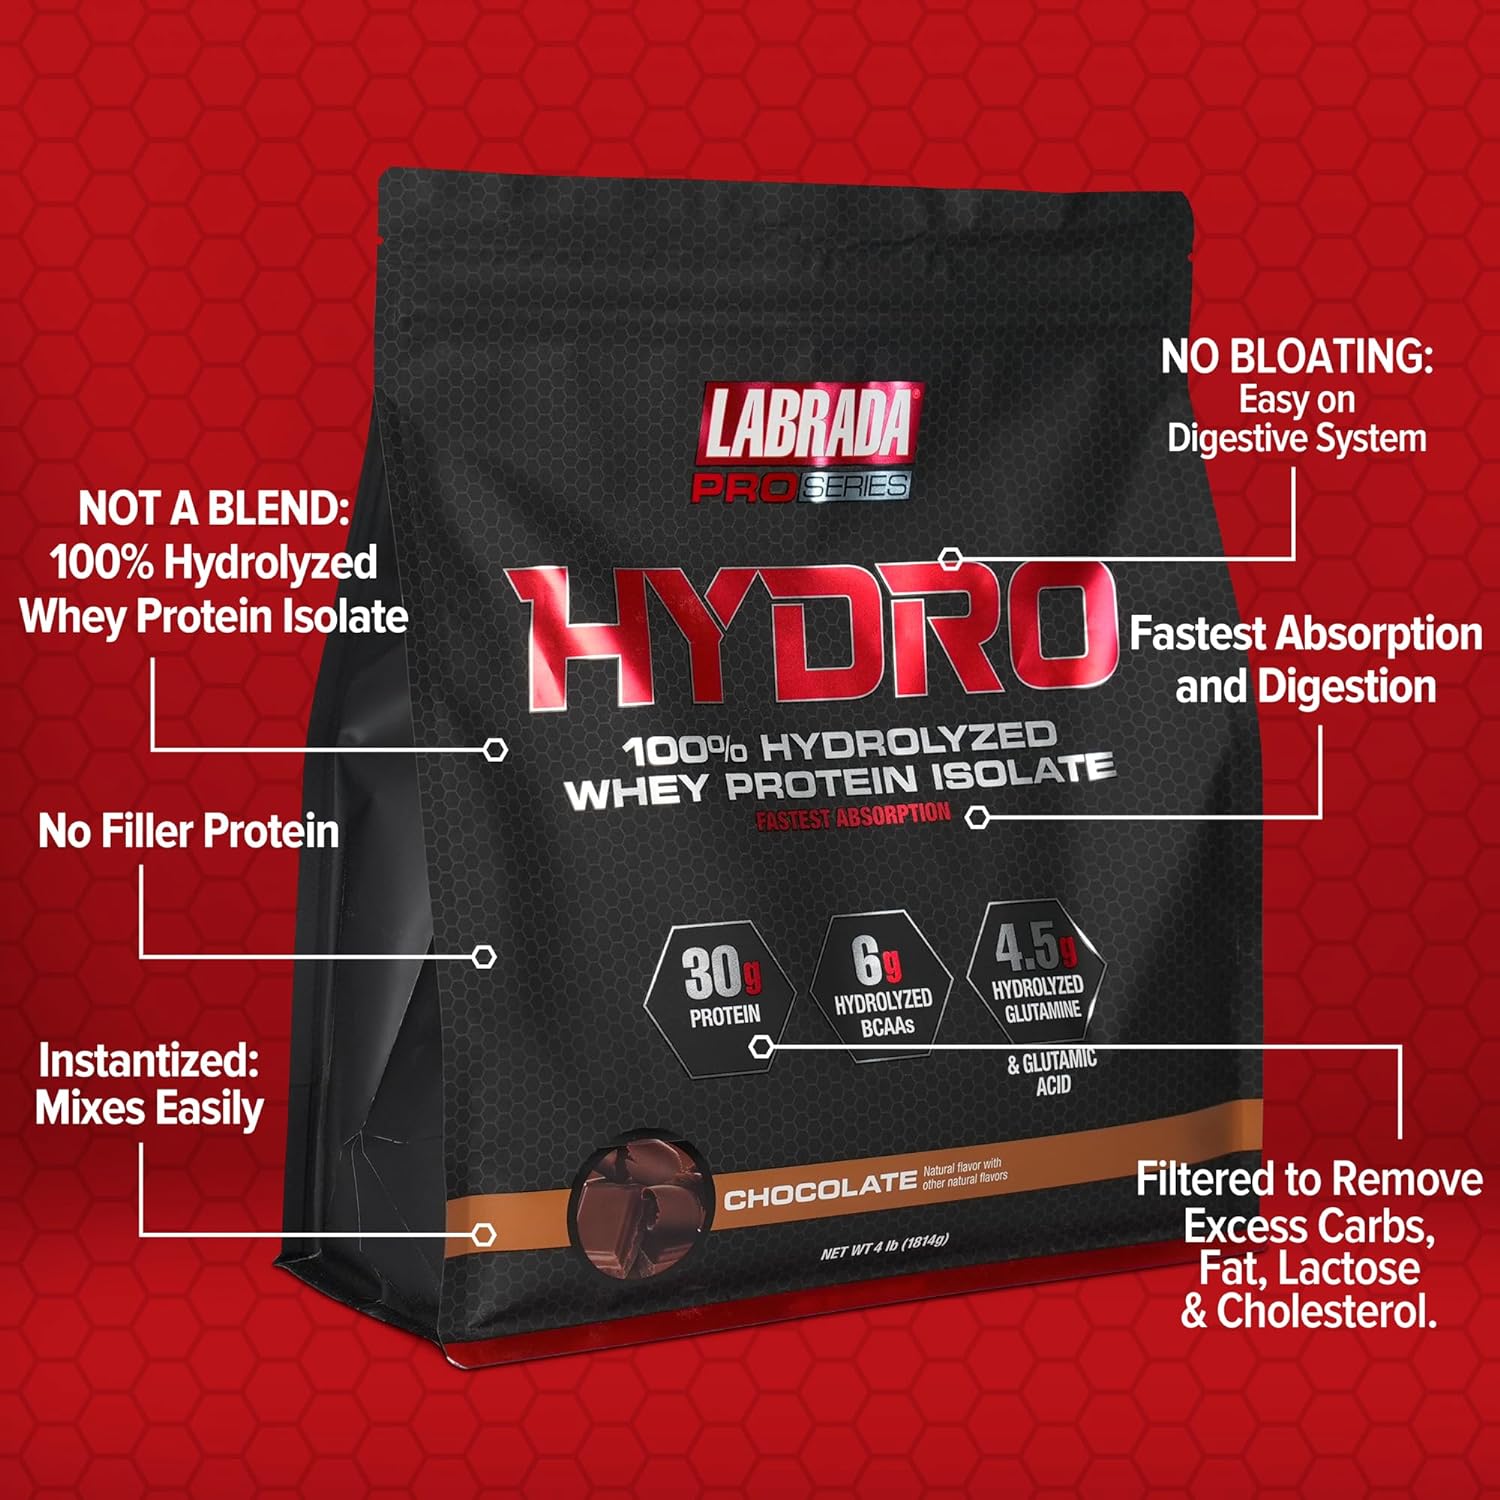 Labrada Pro Series HYDRO, 100% Whey Protein Hydrolyzed, 30g Protein, 6g BCAA, 4.5g Glutamine | Made in USA